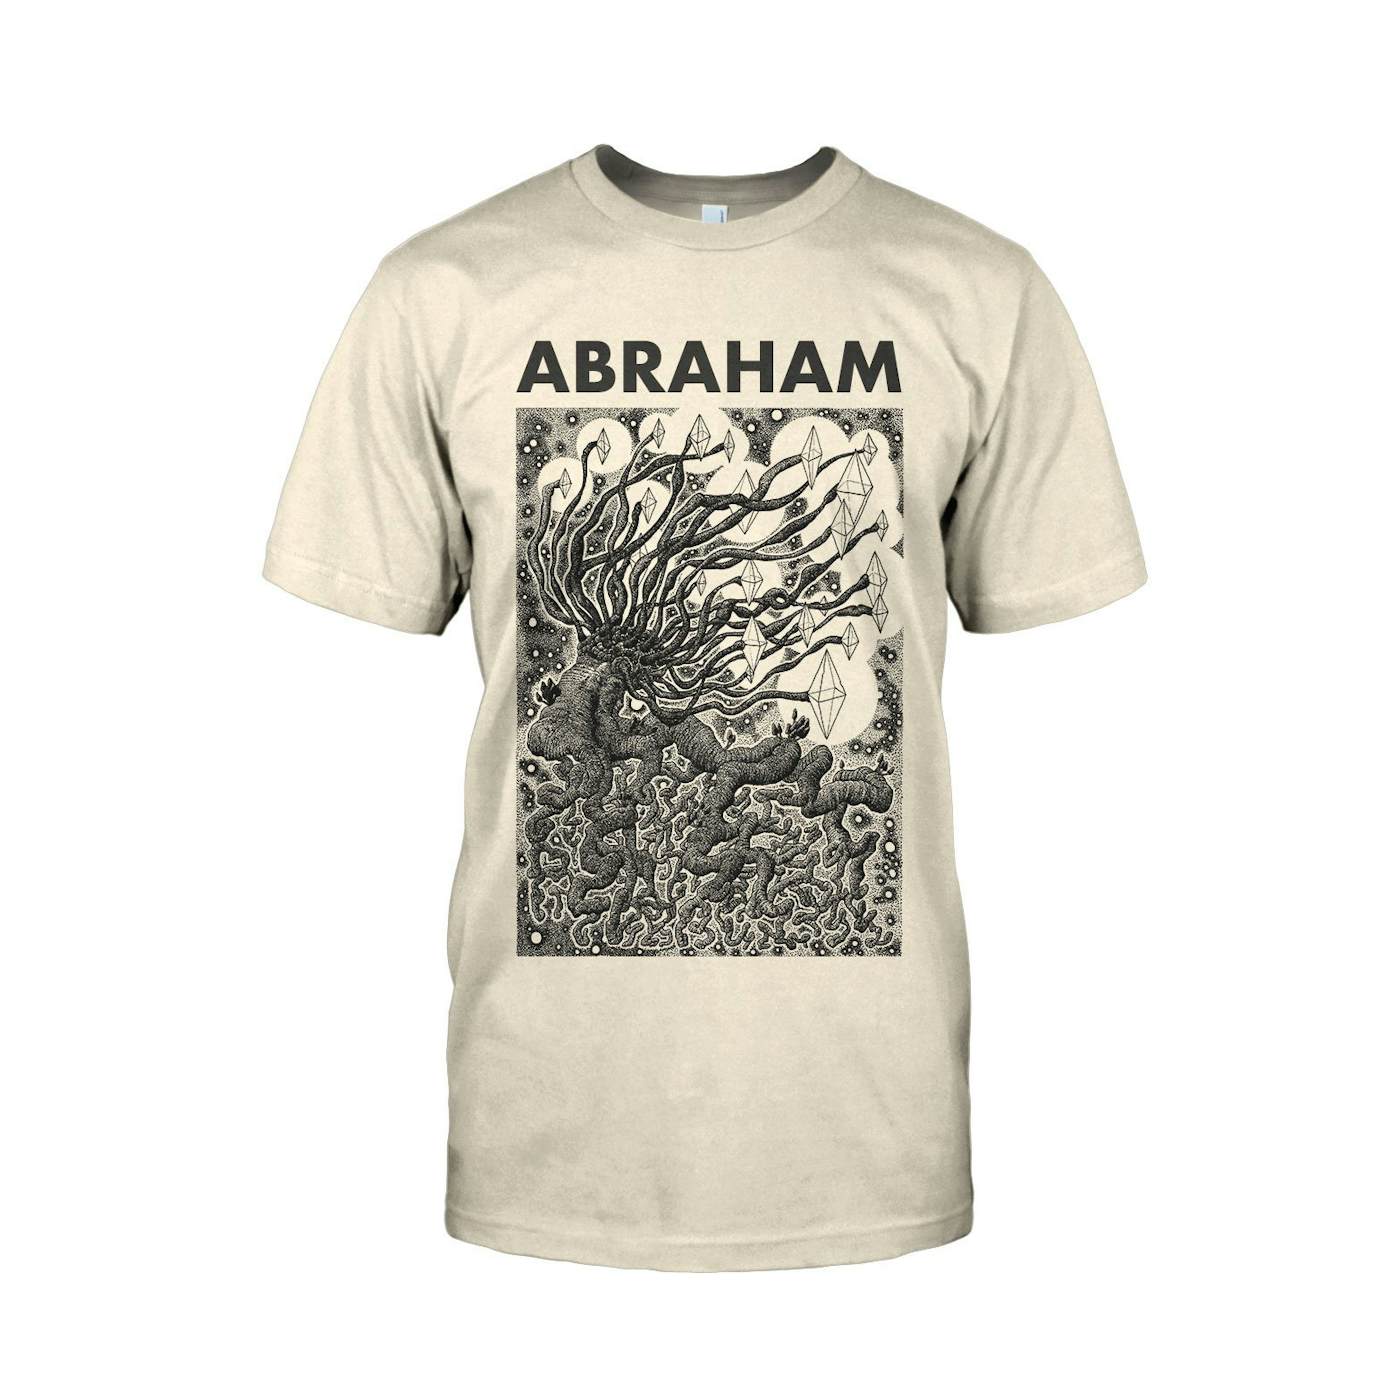 Abraham "Cristo" T-Shirt